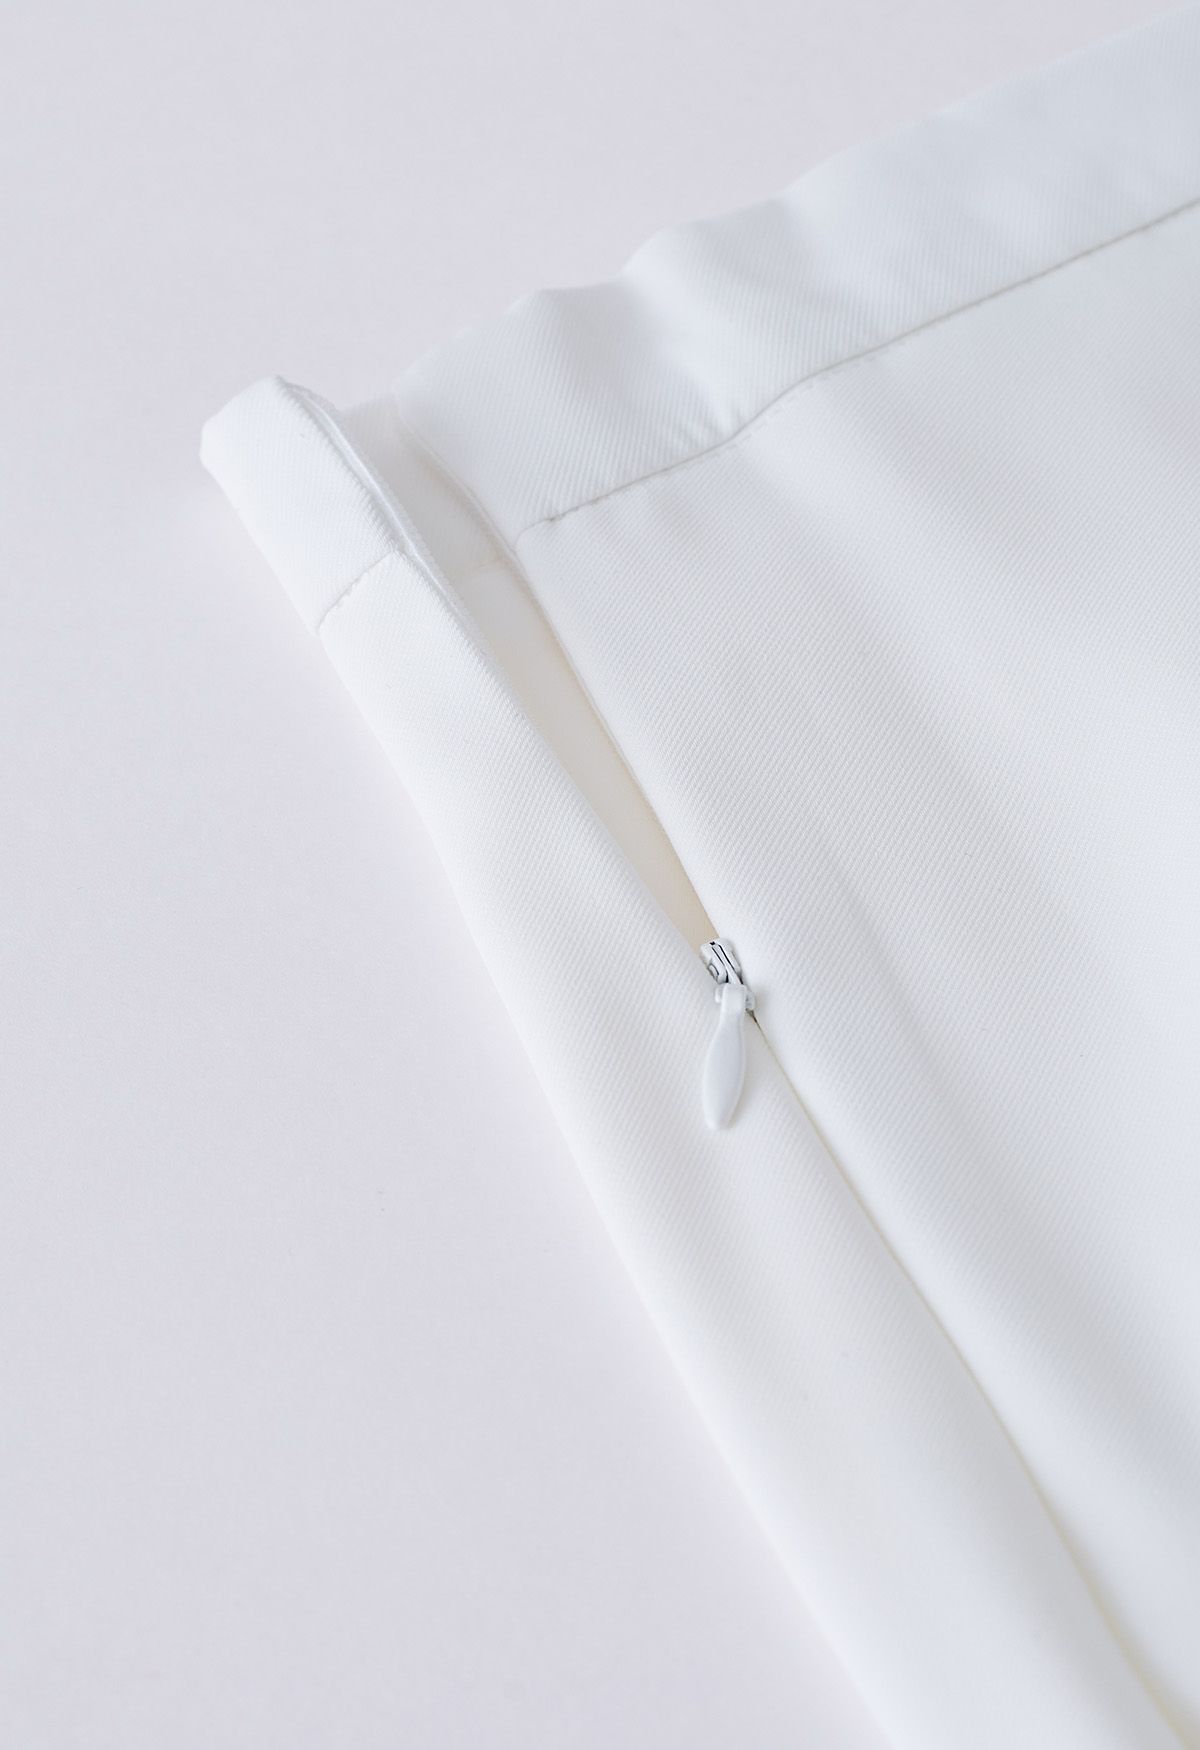 Side Pleated Flap Midi Skirt in White